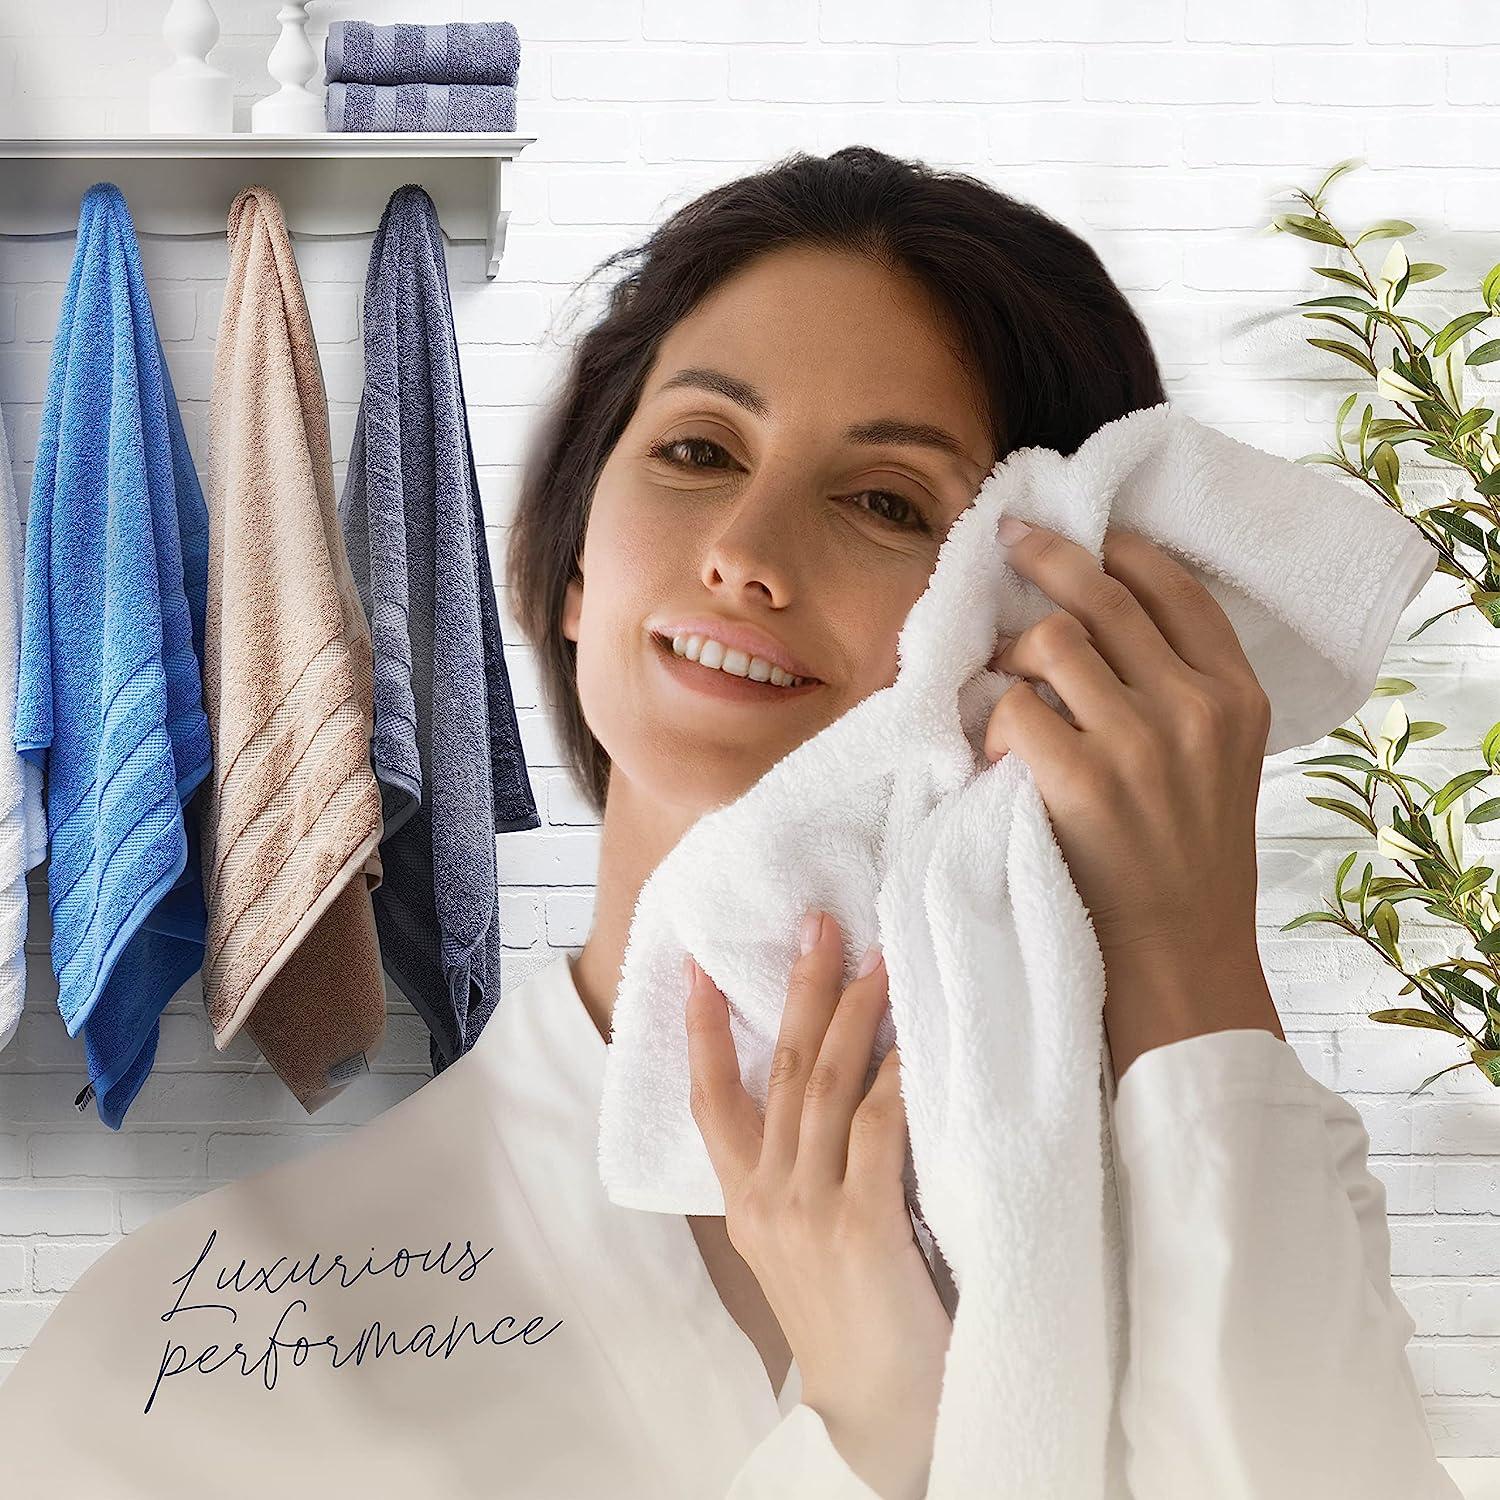 Jumbo Bath Sheets Towels For Adults 35 x 70 - 2-Pack - 100